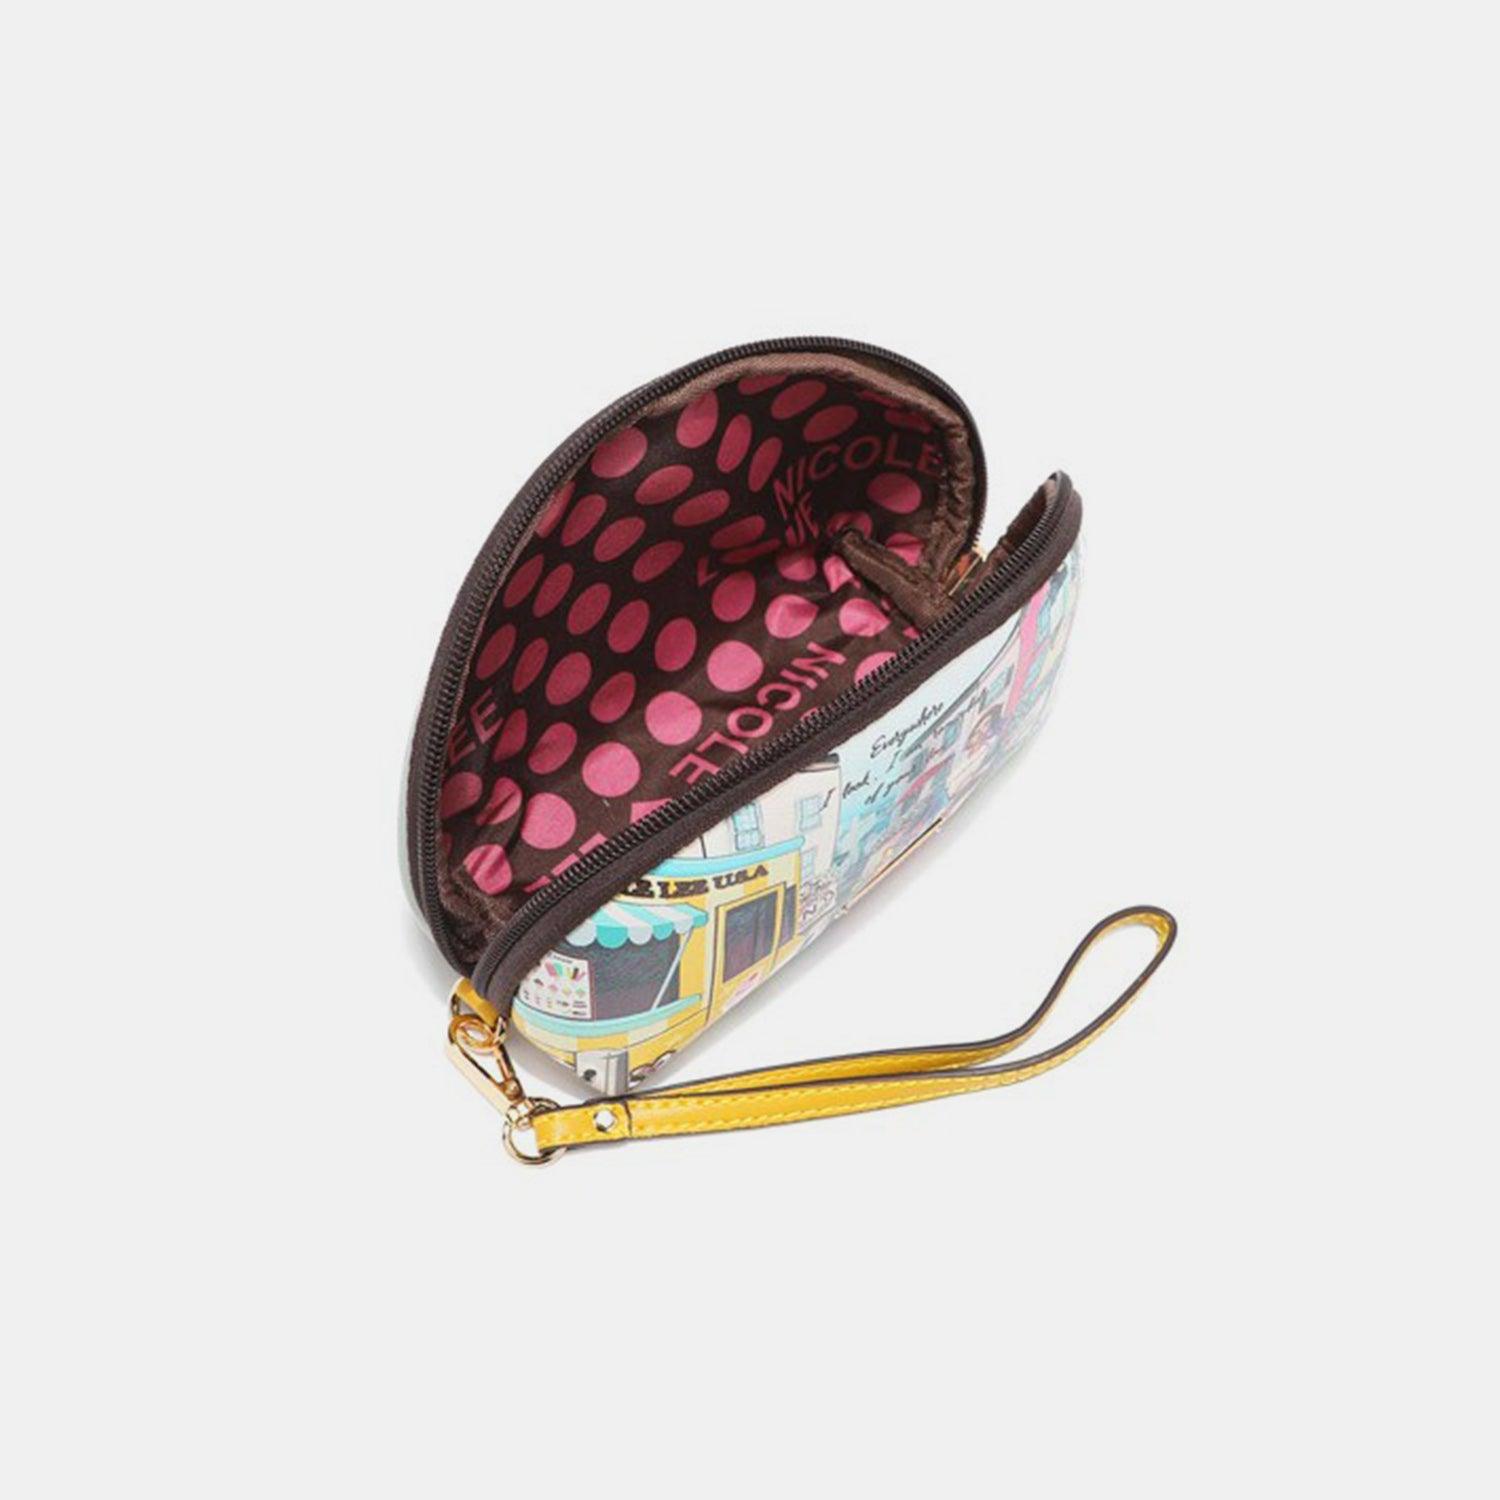 a small purse with a polka dot design